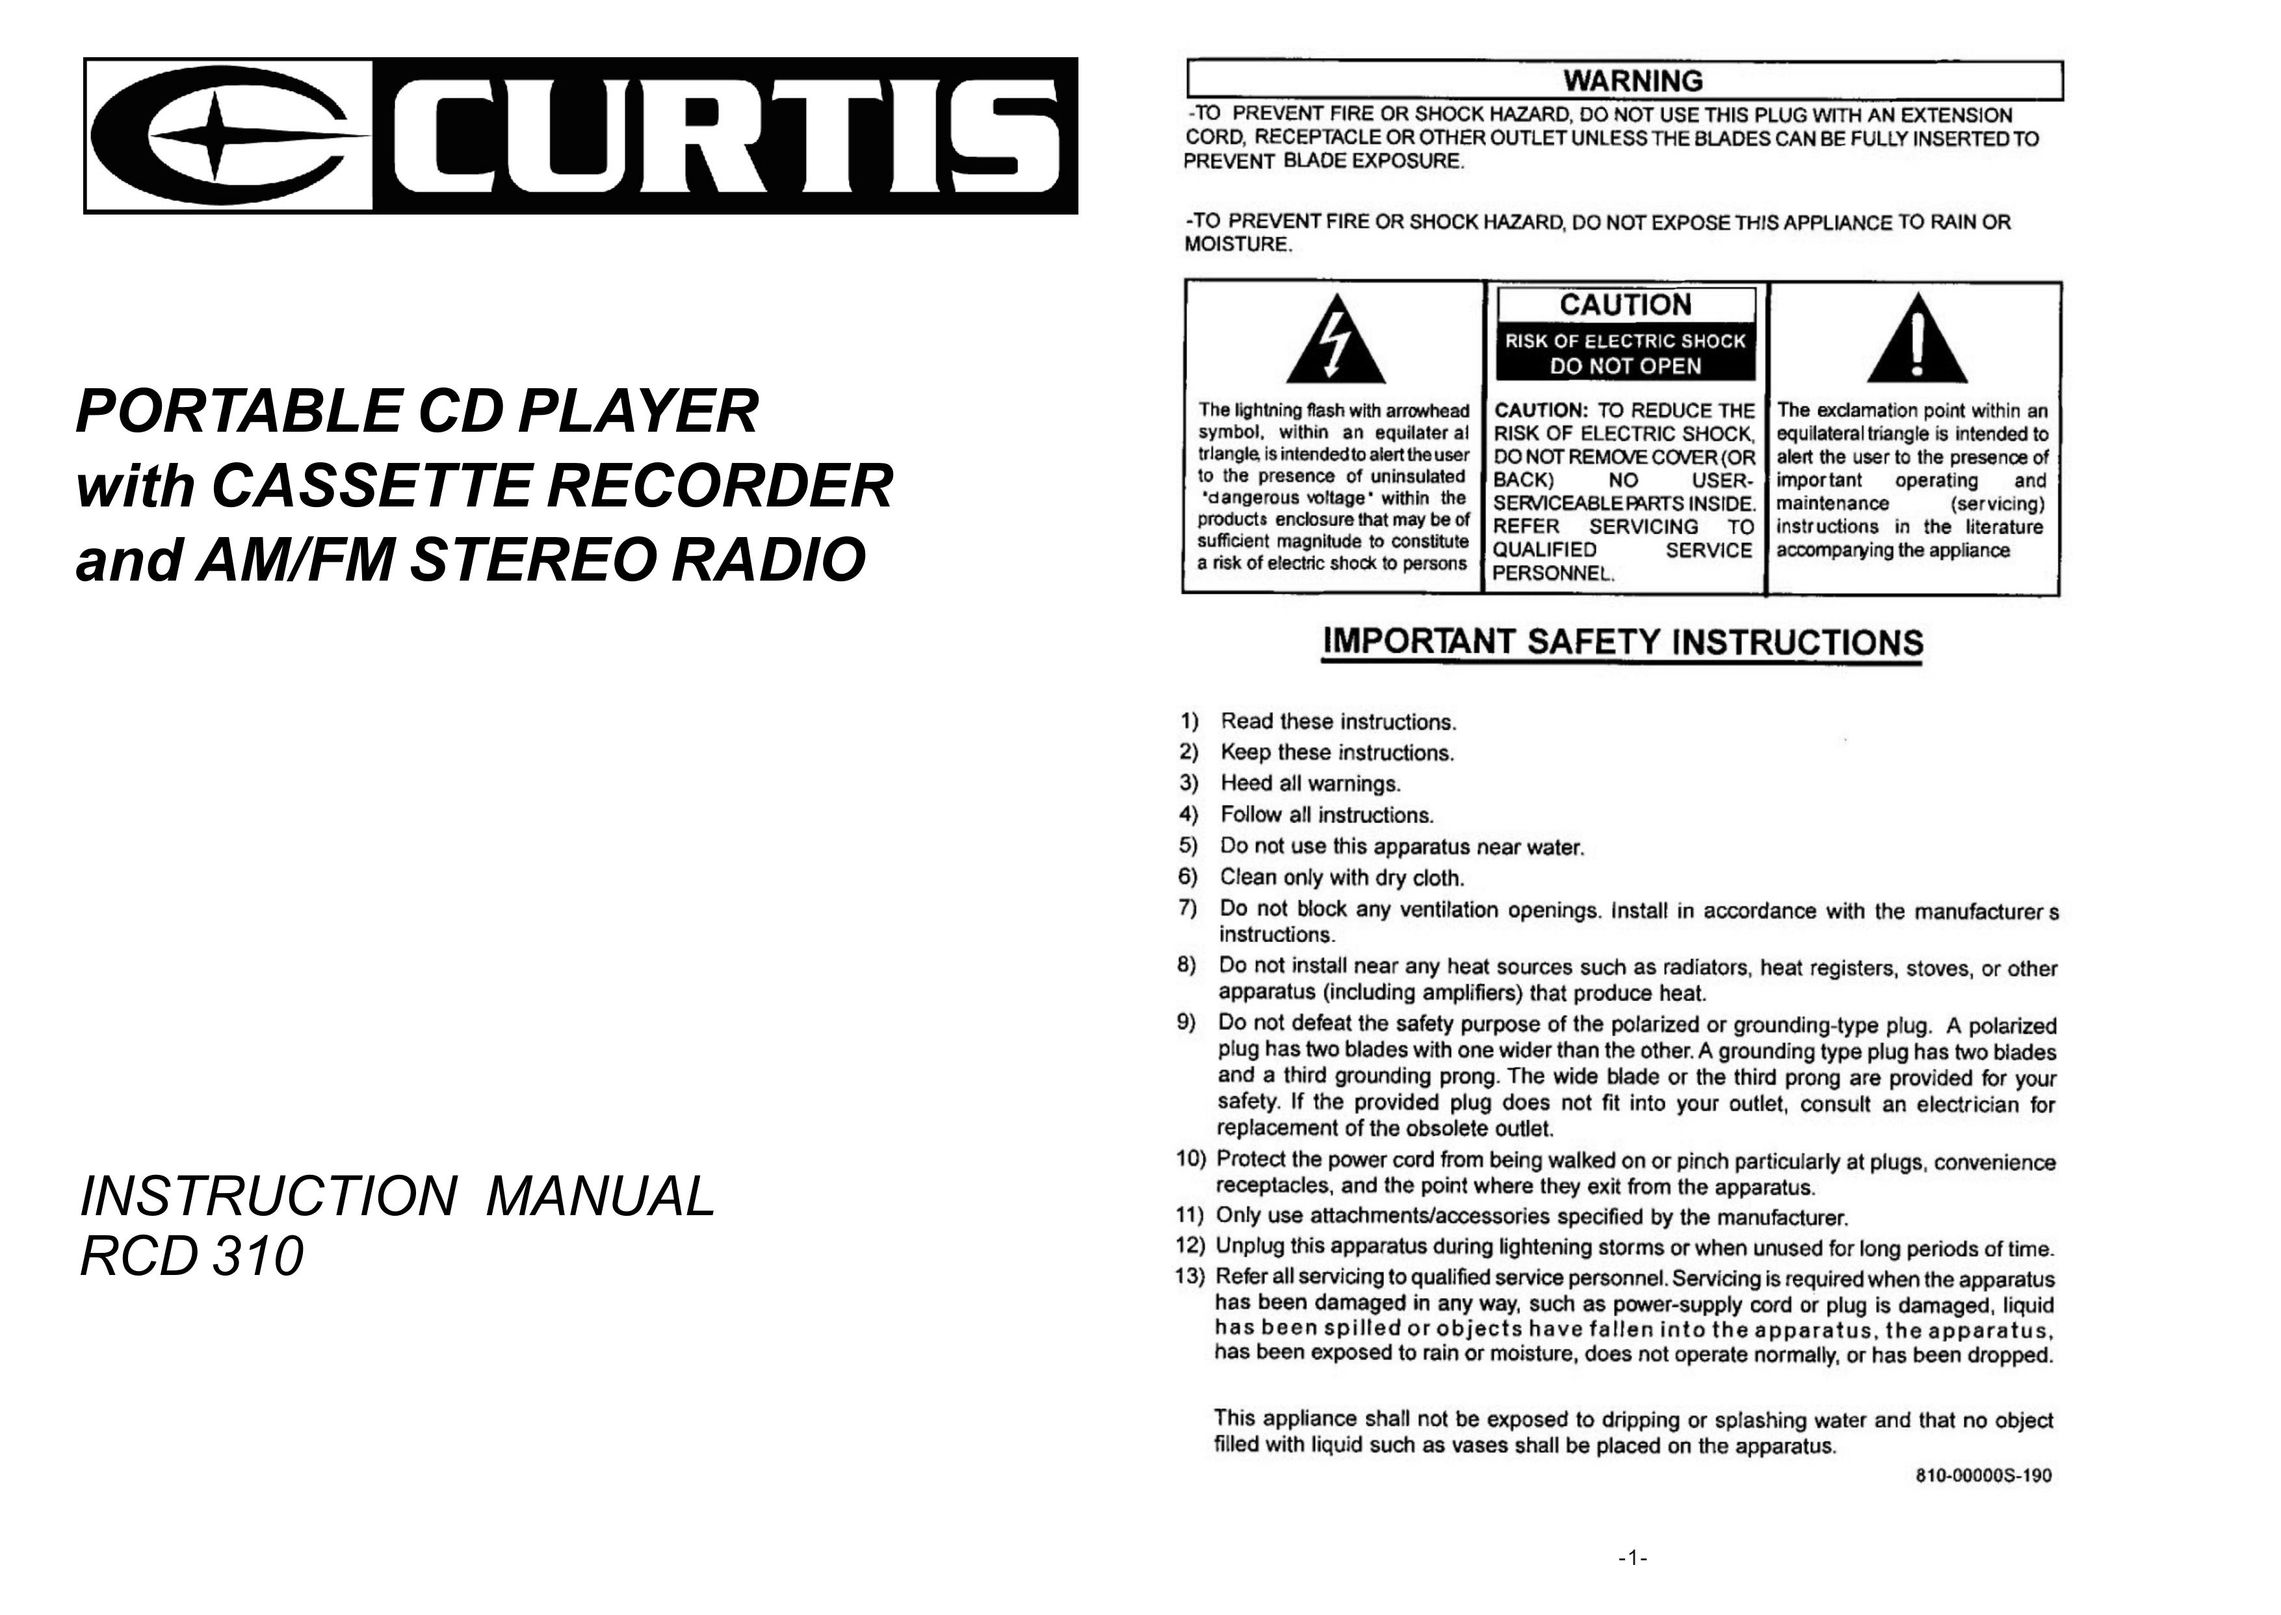 Curtis RCD 310 Portable CD Player User Manual